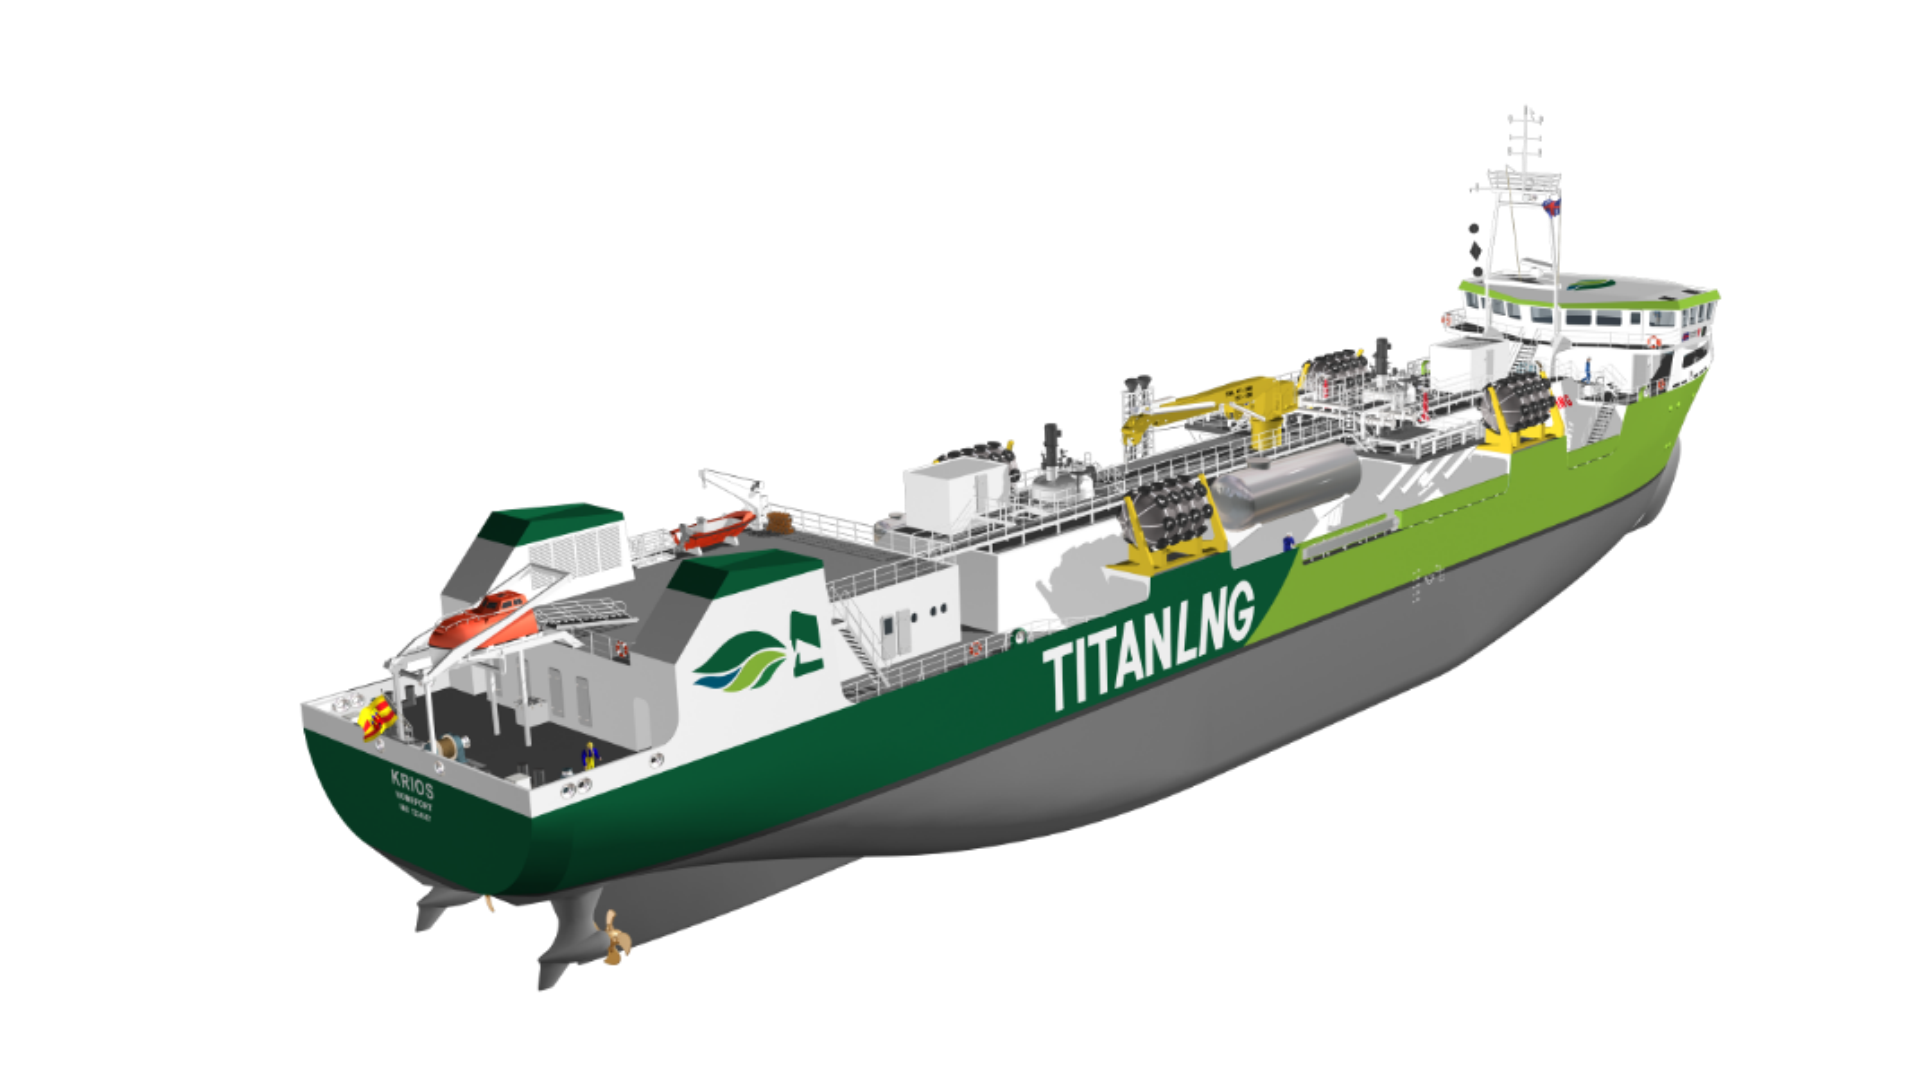 Titan LNG lines up new bunkering vessel